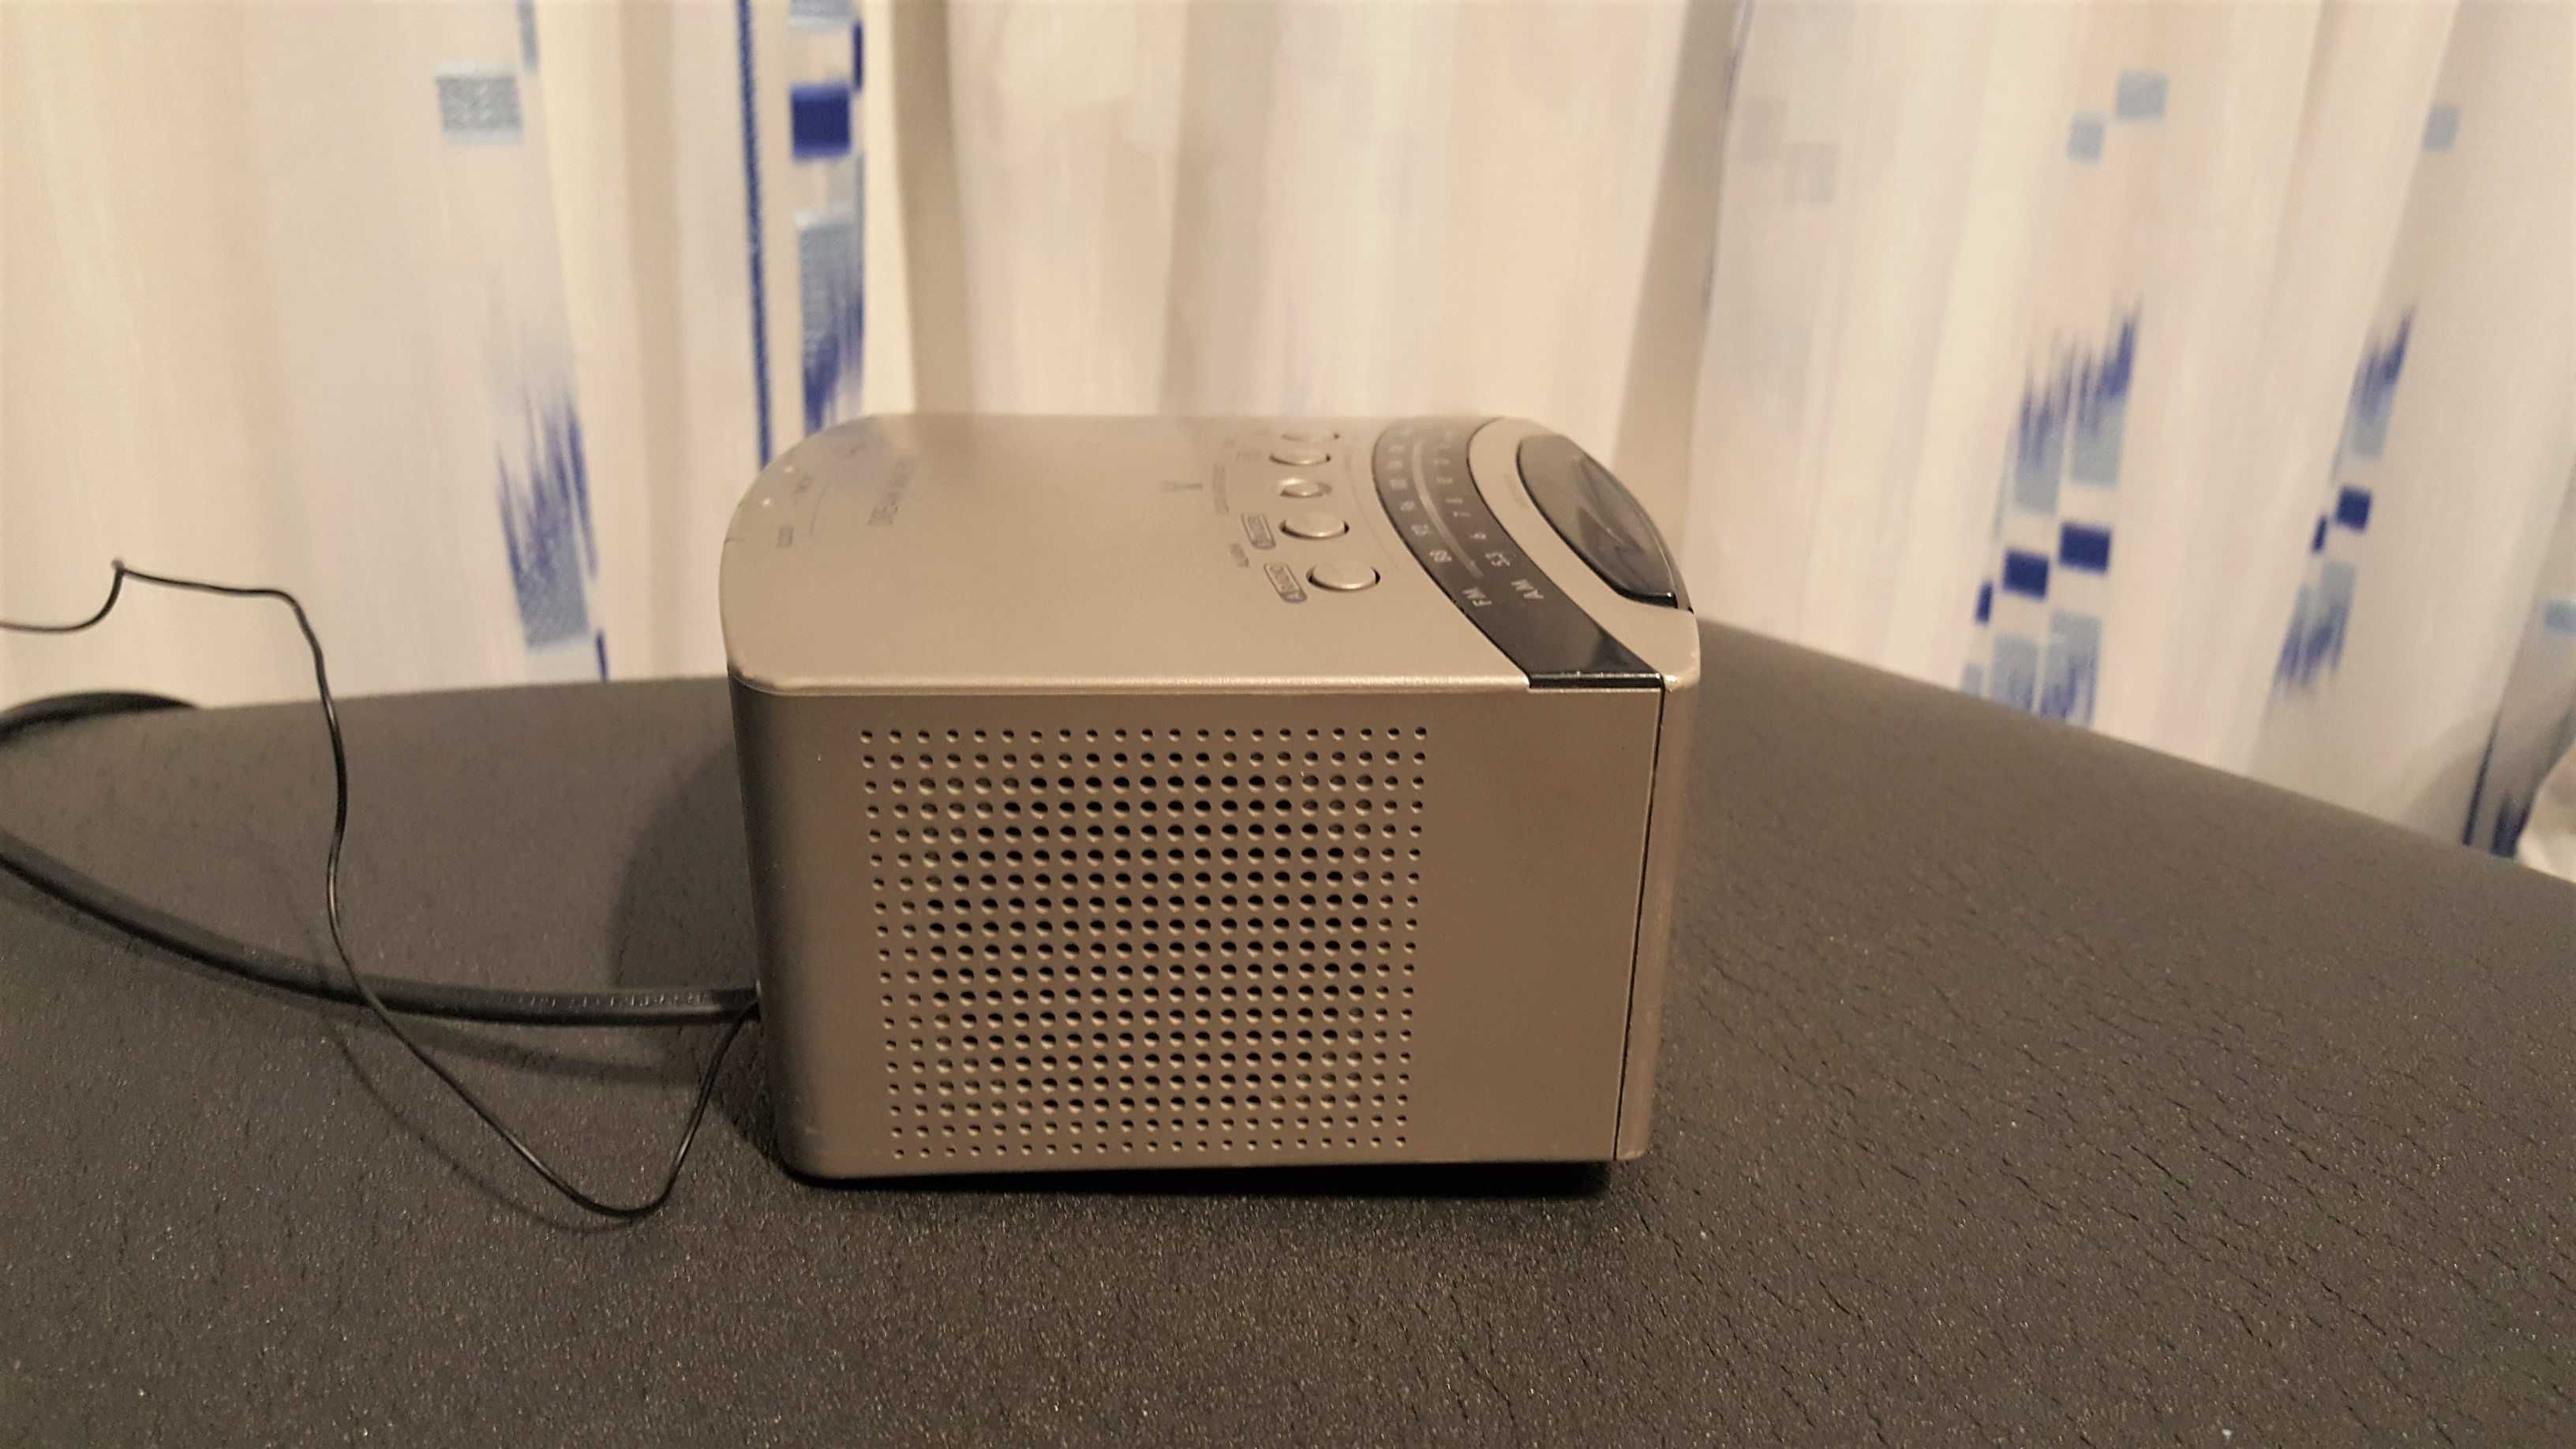 Radio cu ceas dream machine pentru cunoscatori Sony ICF C50